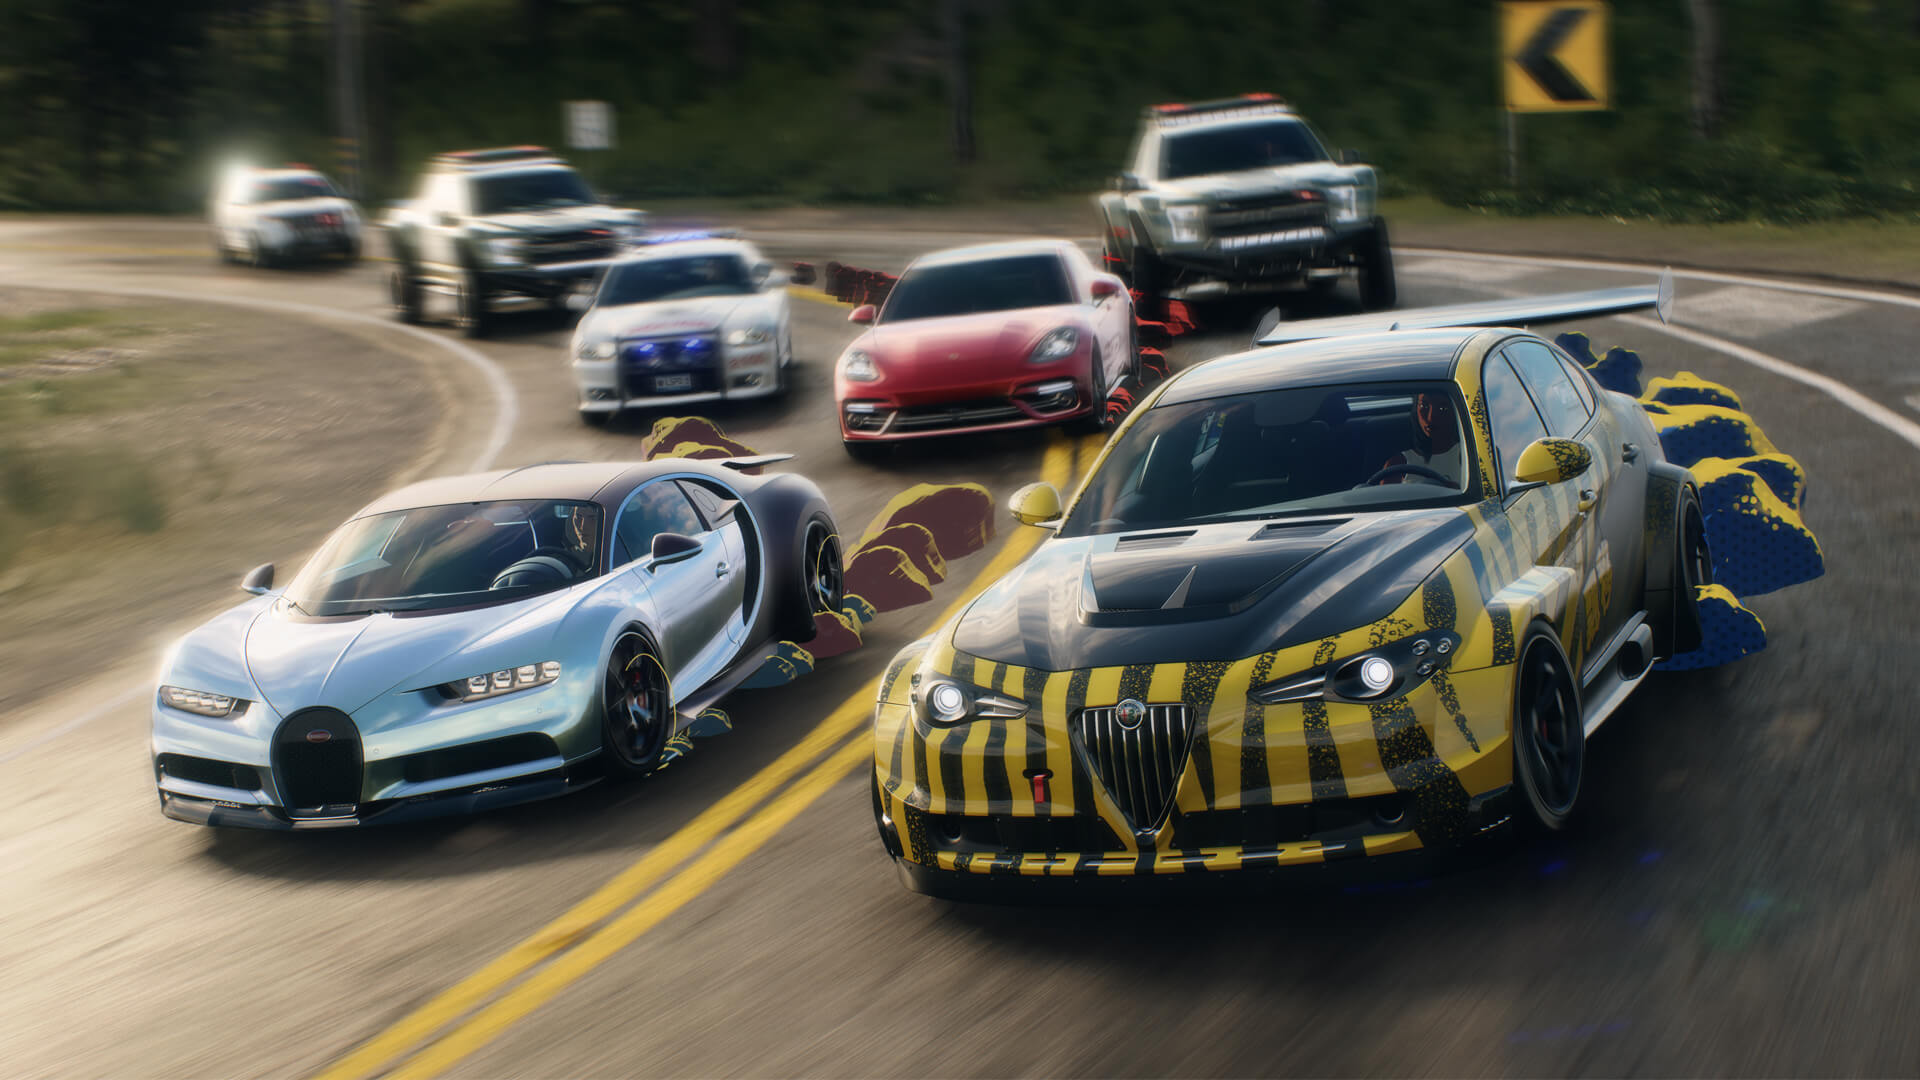 Need for Speed: Unbound Volume 2-update voegt nieuwe content toe